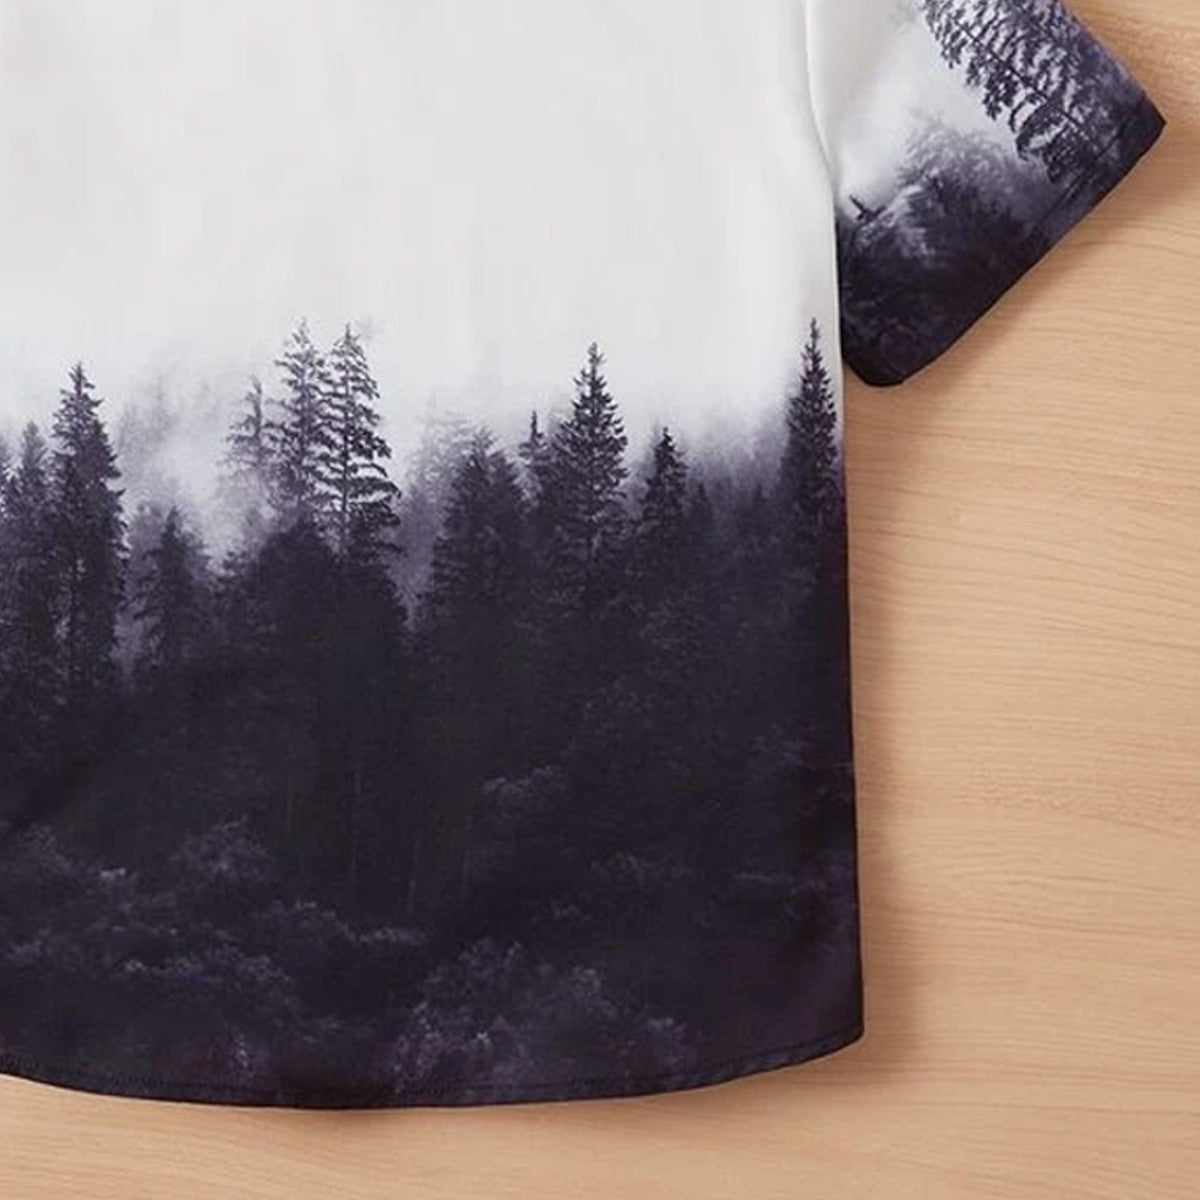 Venutaloza Outdoor Casual Tree Gradient Graphic Short Sleeve Shirt For Boys.